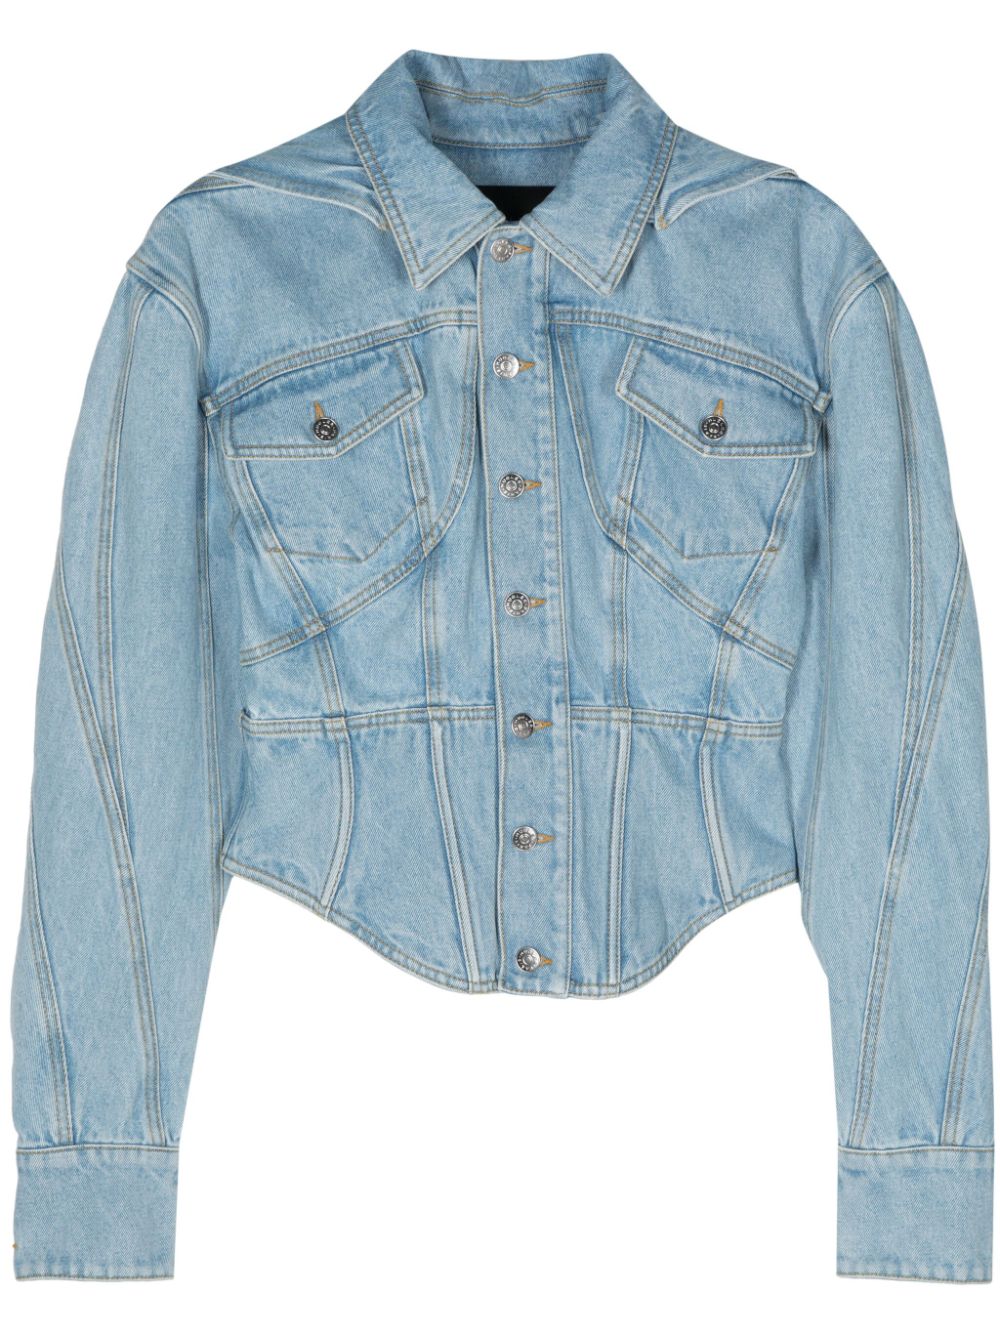 MUGLER Women's Blue Organic Cotton Denim Jacket with Hood and Panelled Design